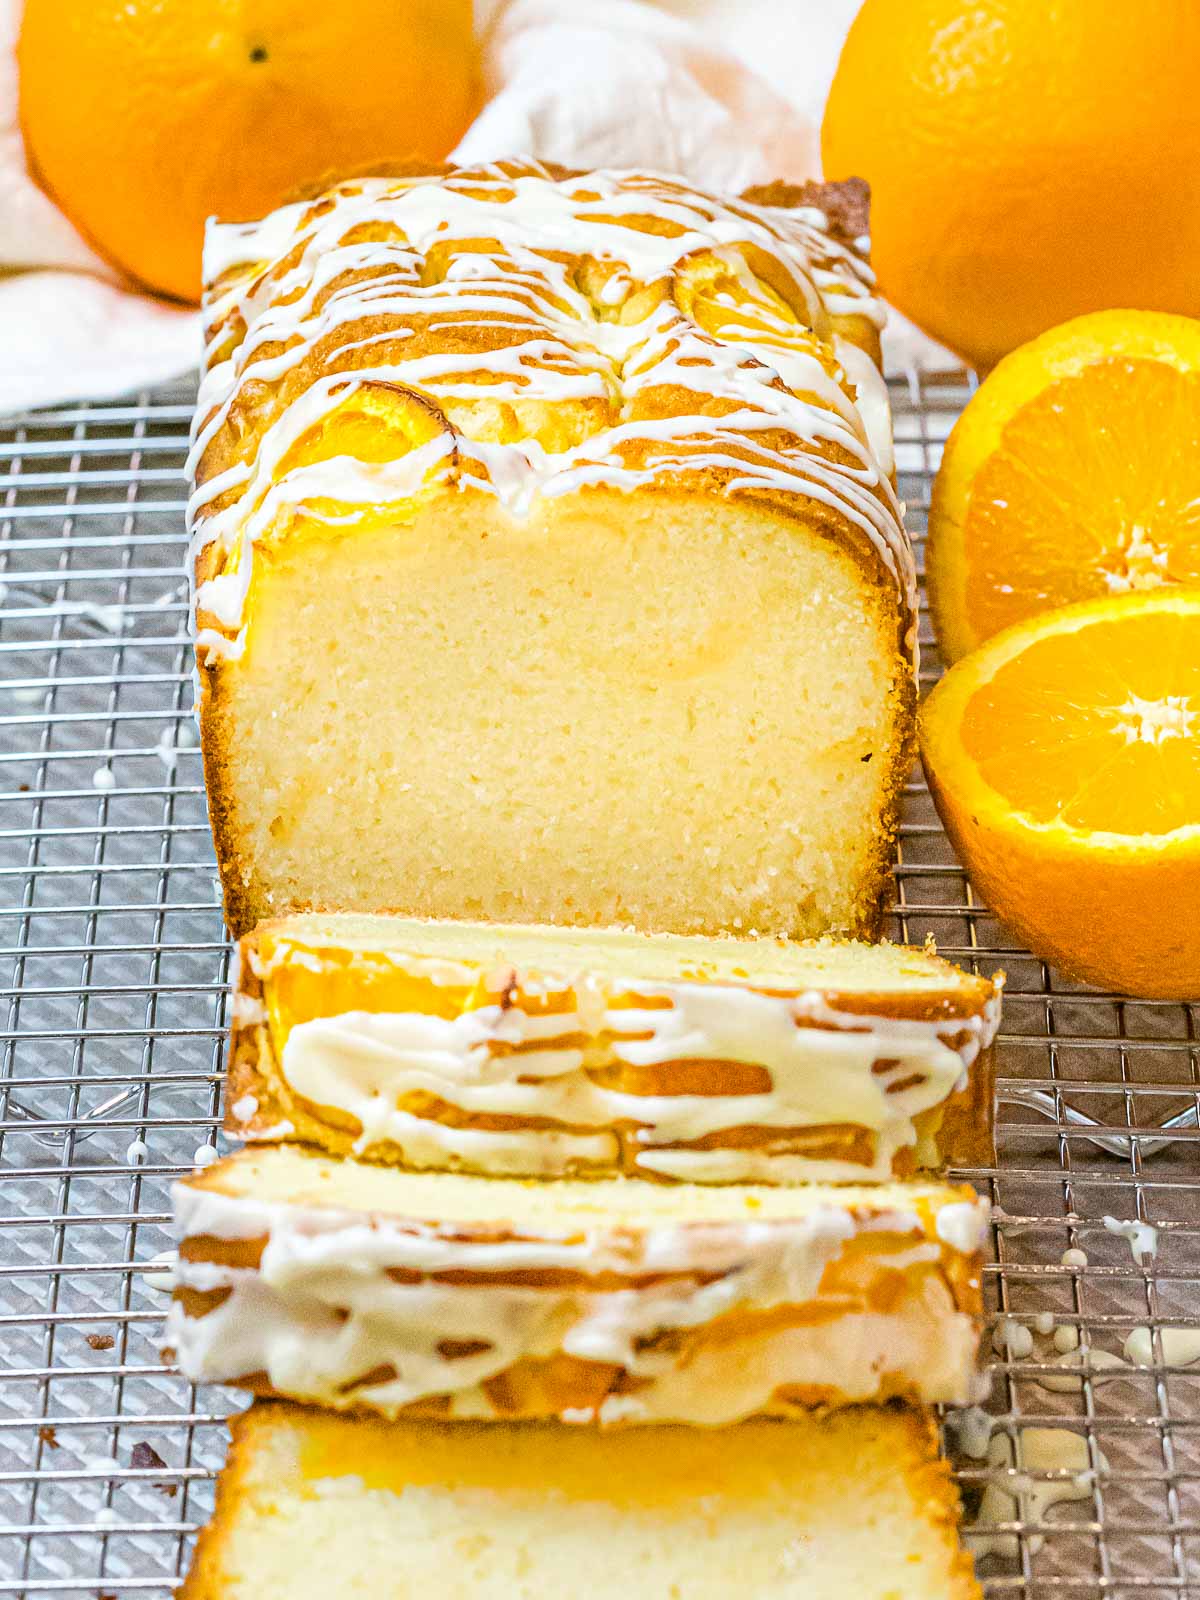 golden brown orange pound cake with icing glaze cut into slices next to oranges